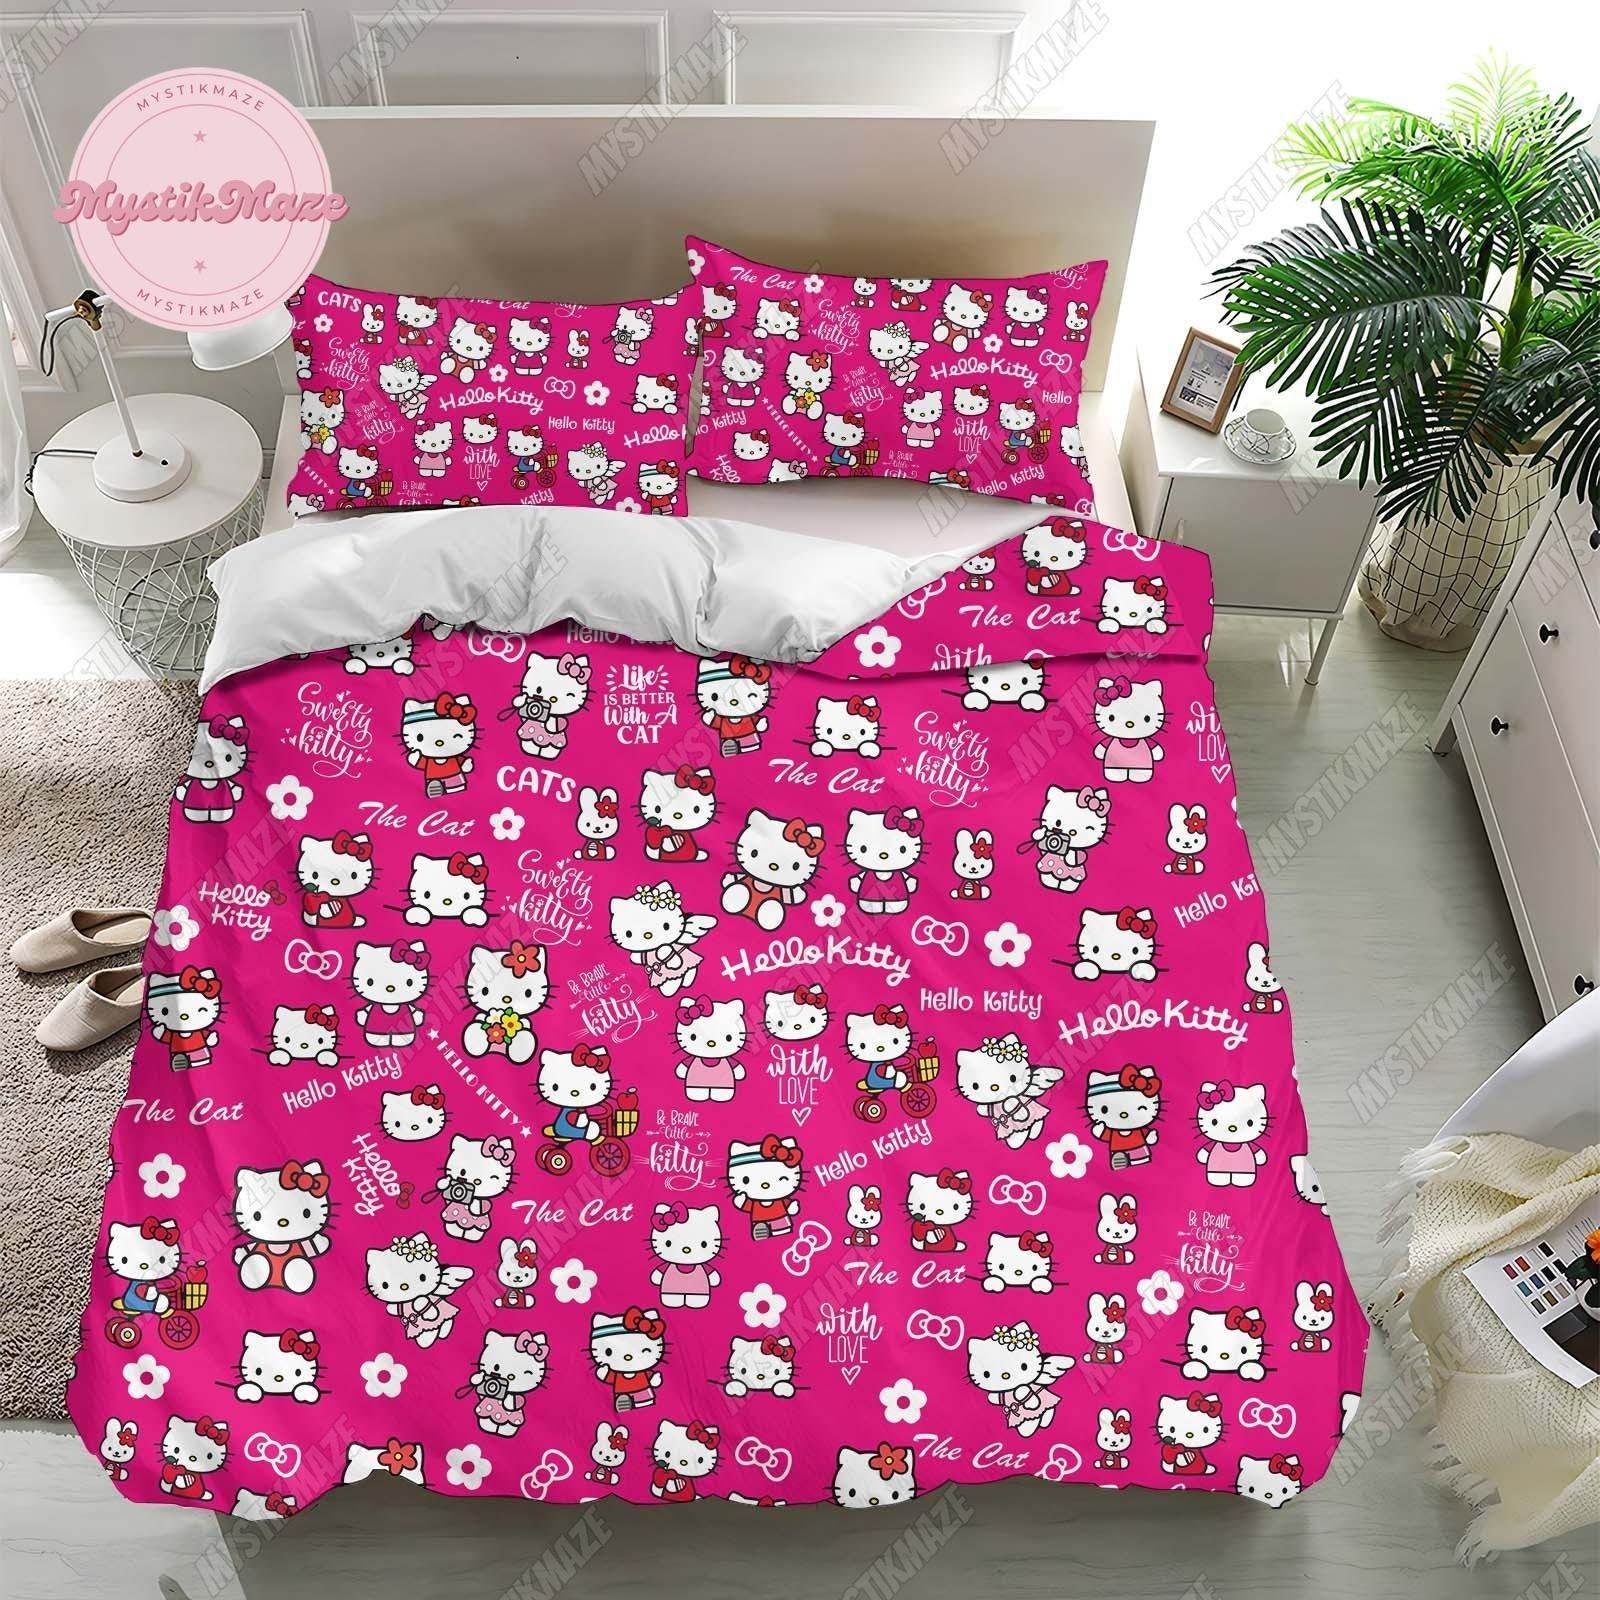 Hello Kitty Duvet Cover, Kitty Cat Bedding, Hello Kitty Bedding Set